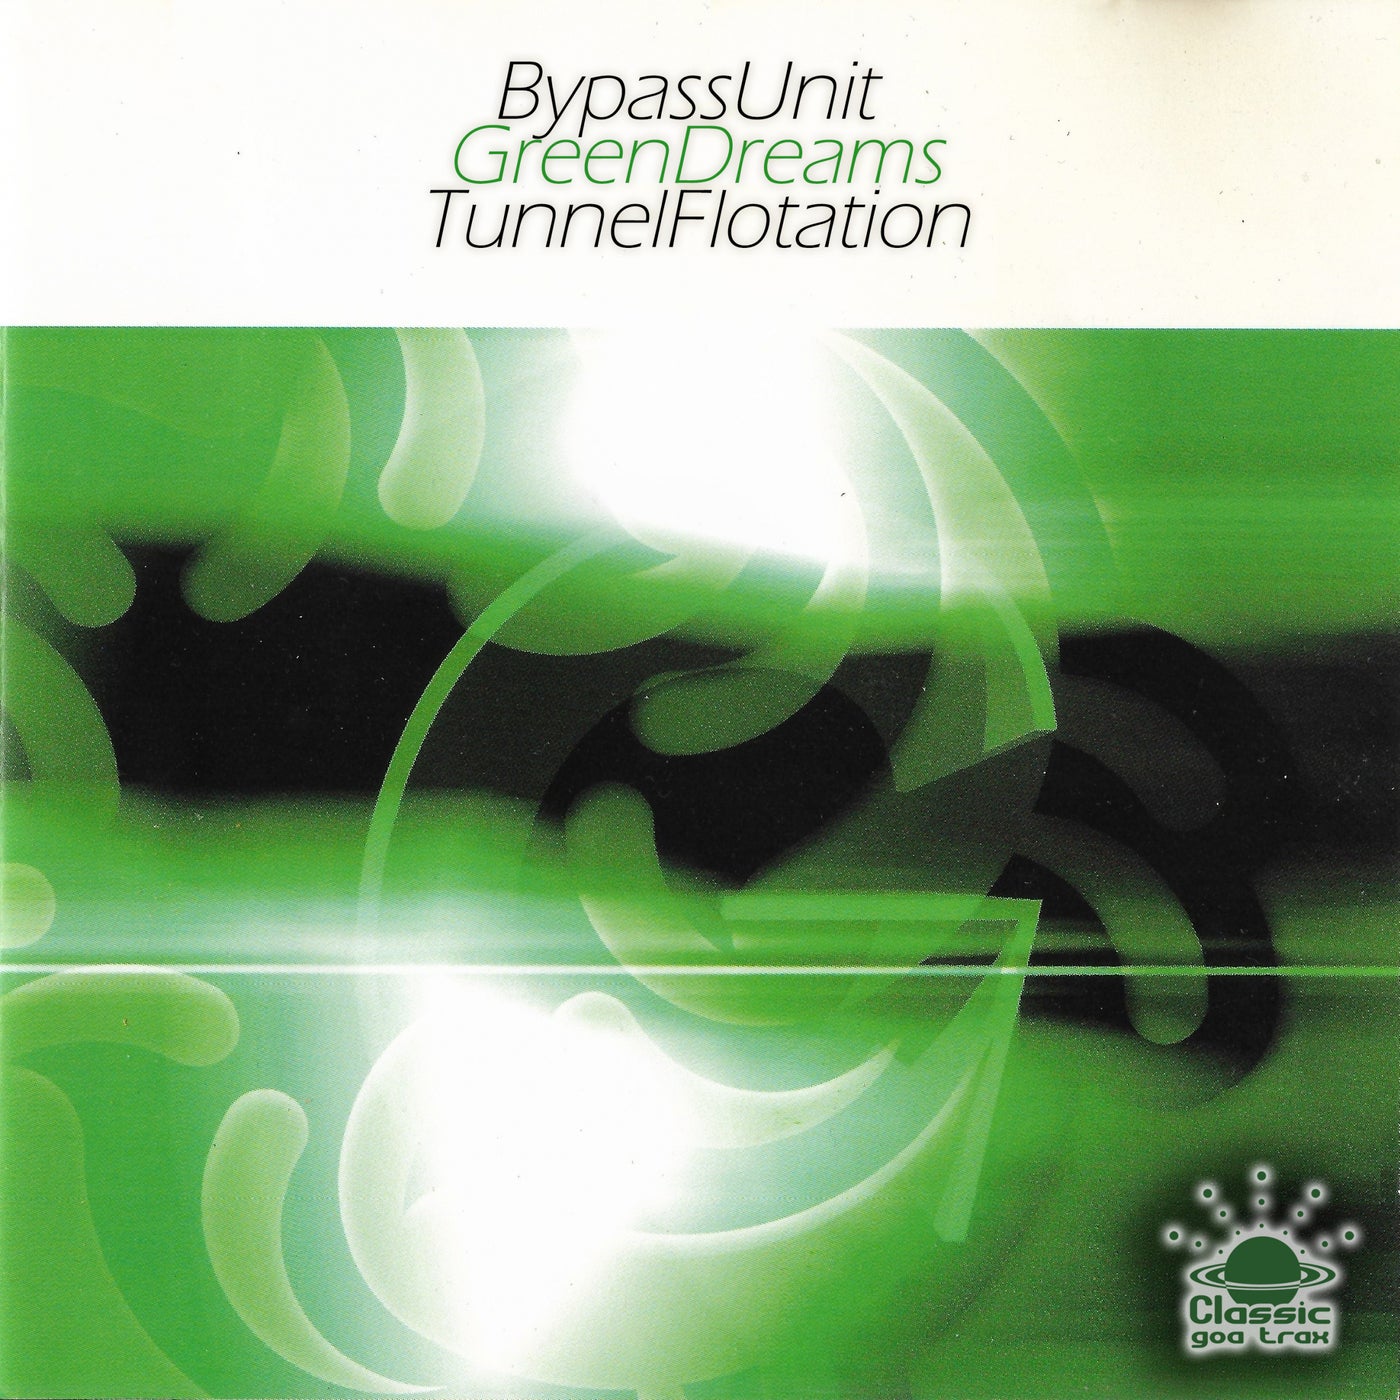 Bypass Unit - Green Dreams & Tunnel Flotation [Classic Goa Trax]